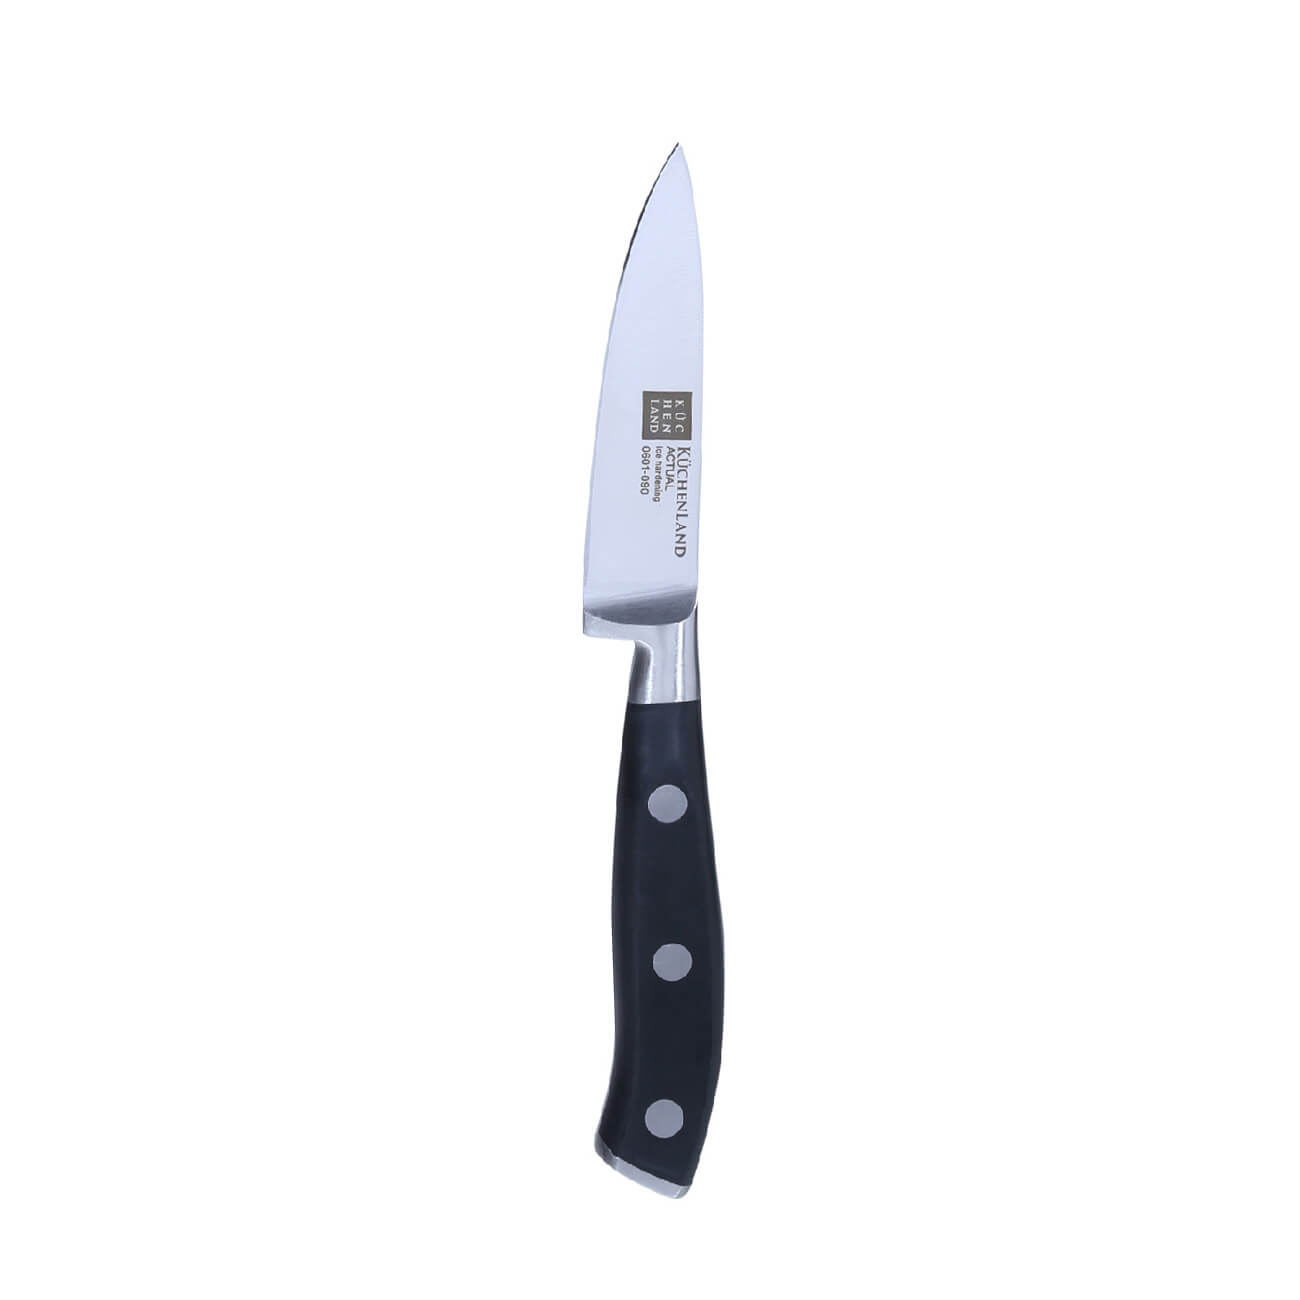 Paring knife, 9 cm, steel / plastic, Actual изображение № 1